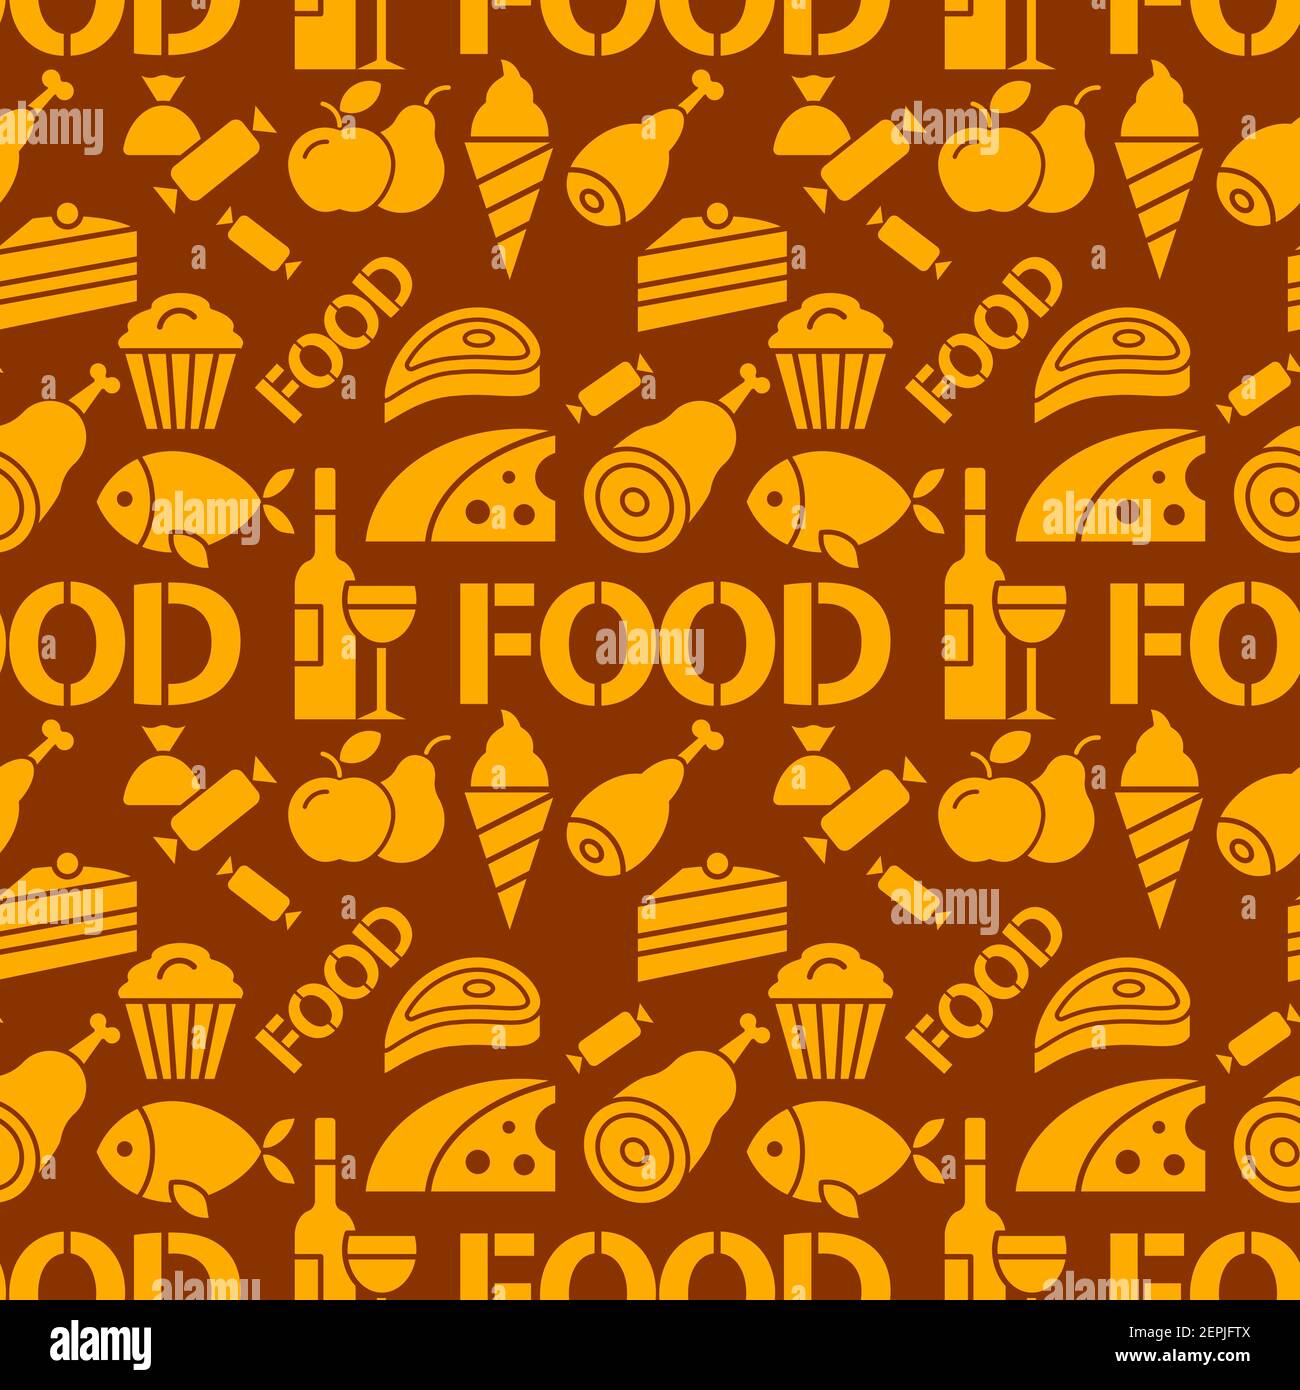 Bunte Illustration von Lebensmitteln und Lebensmittel nahtlose Muster Stock Vektor